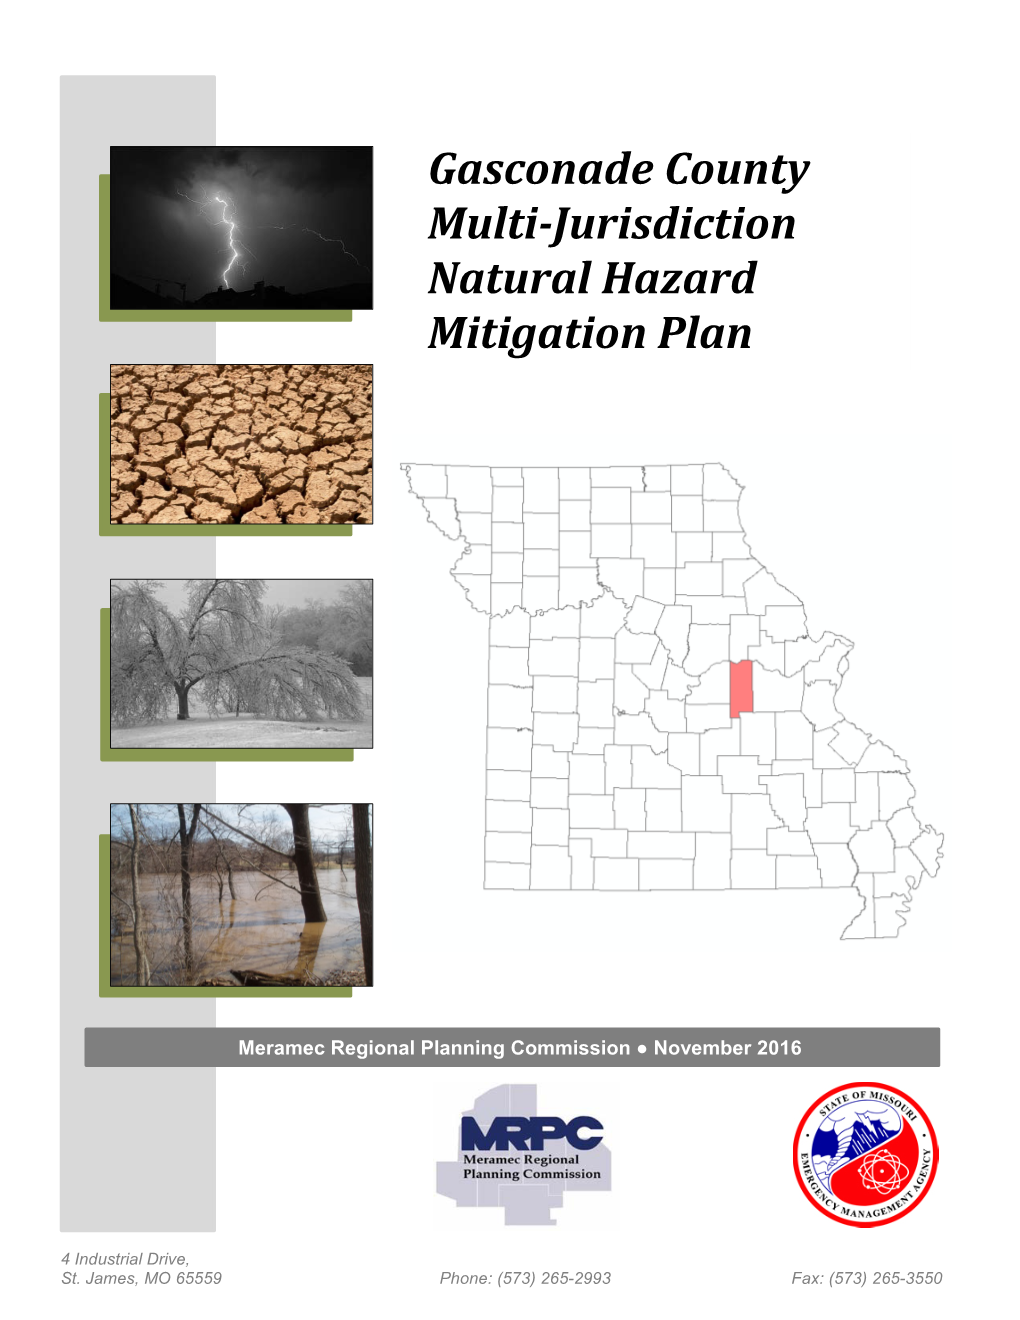 Gasconade County Multi-Jurisdiction Natural Hazard Mitigation Plan